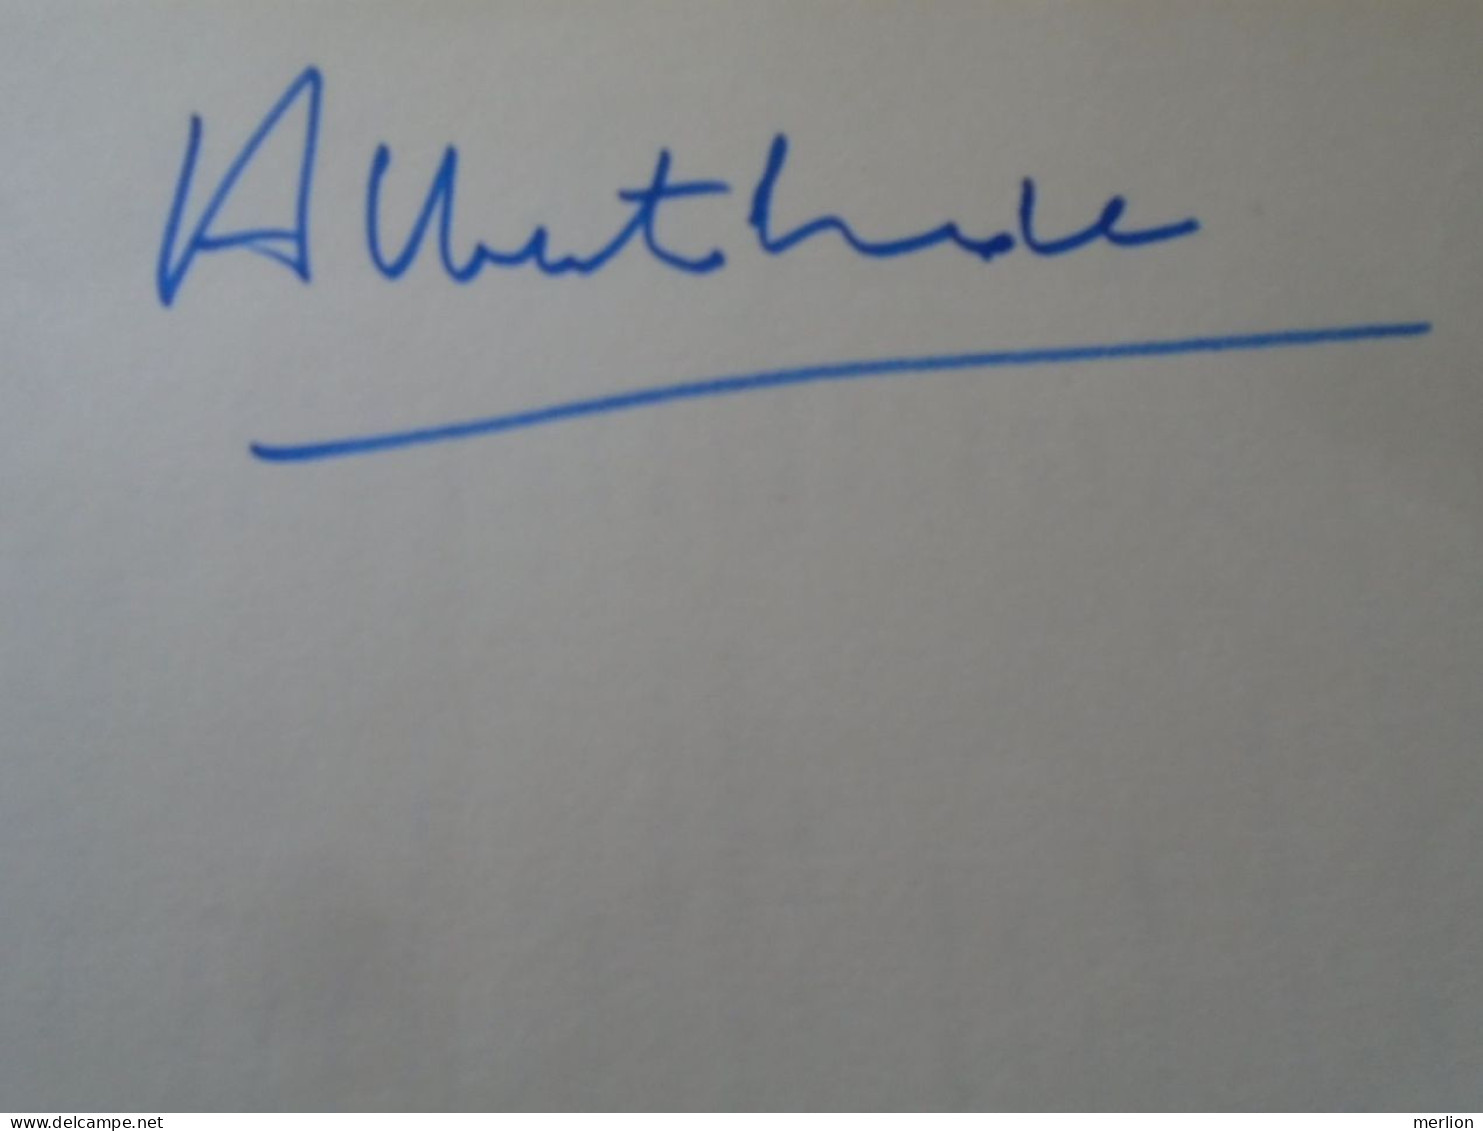 D203338  Signature -Autograph  -  Alberto Erede -Italian Conductor - Music -Opera  Genoa Salzburg - Sänger Und Musiker